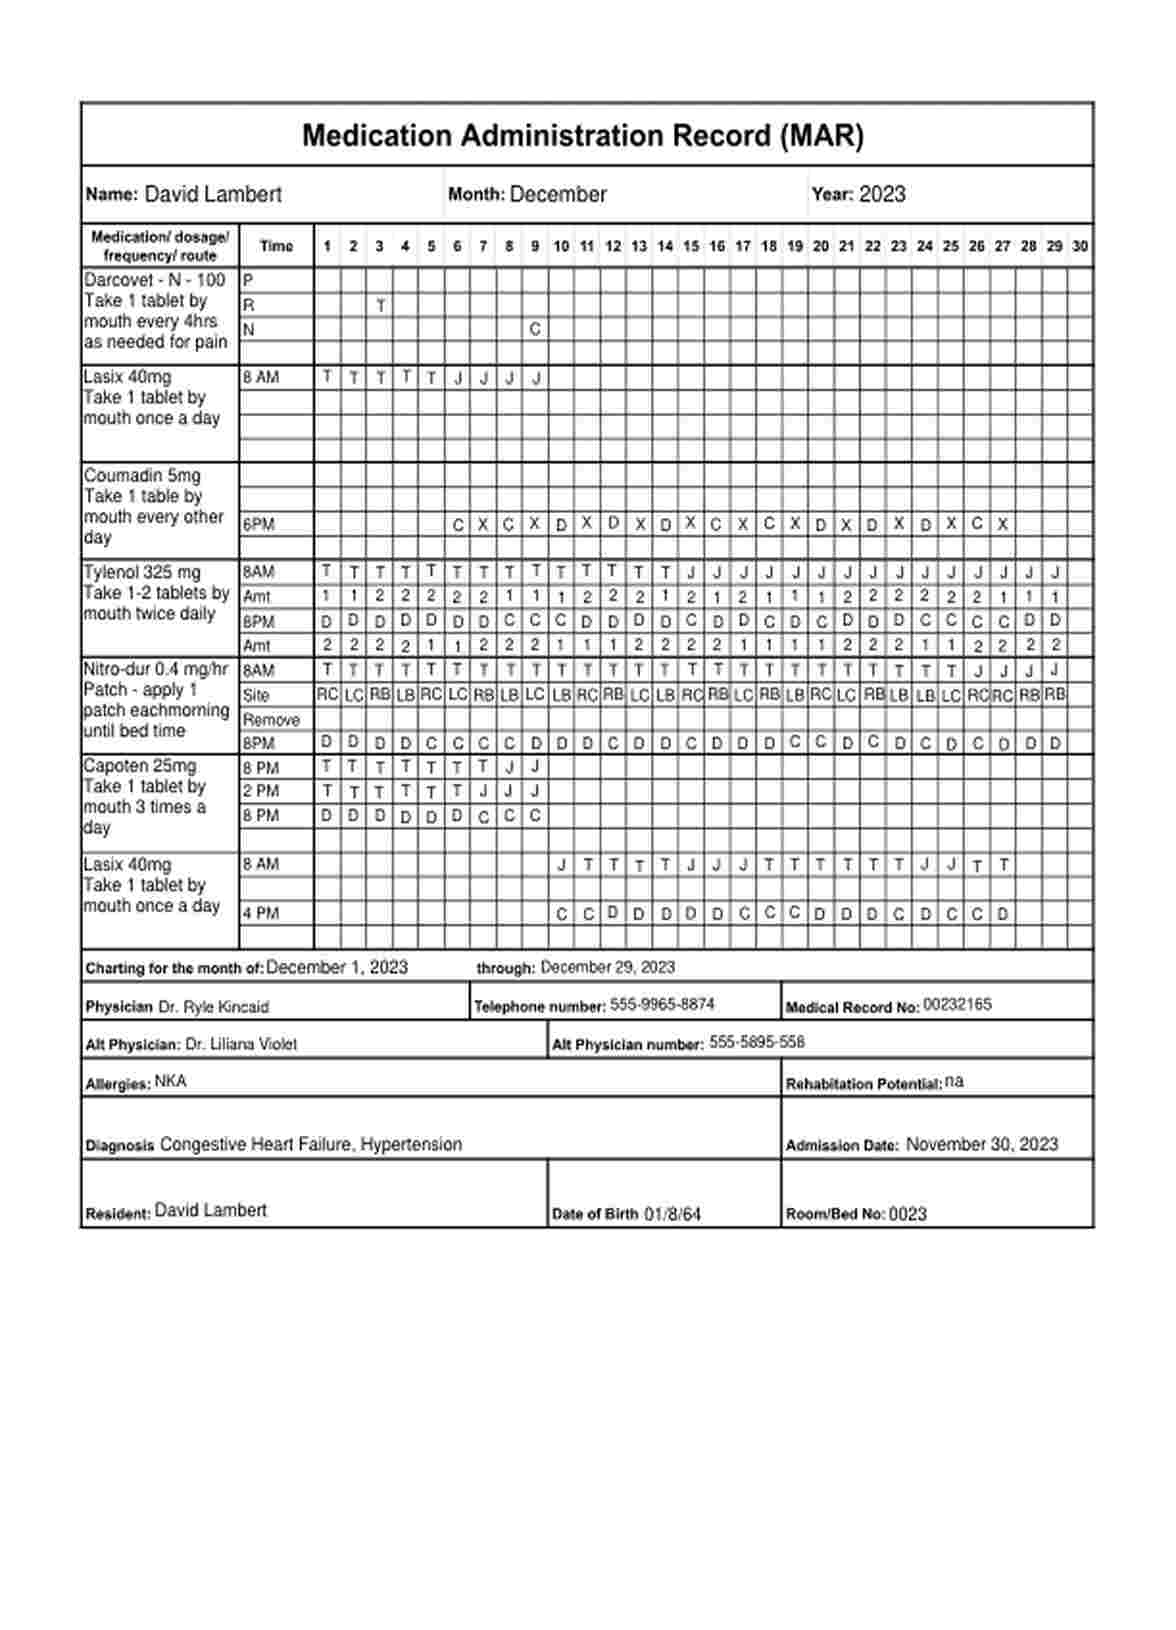 Medication Administration Record (MAR) PDF Example